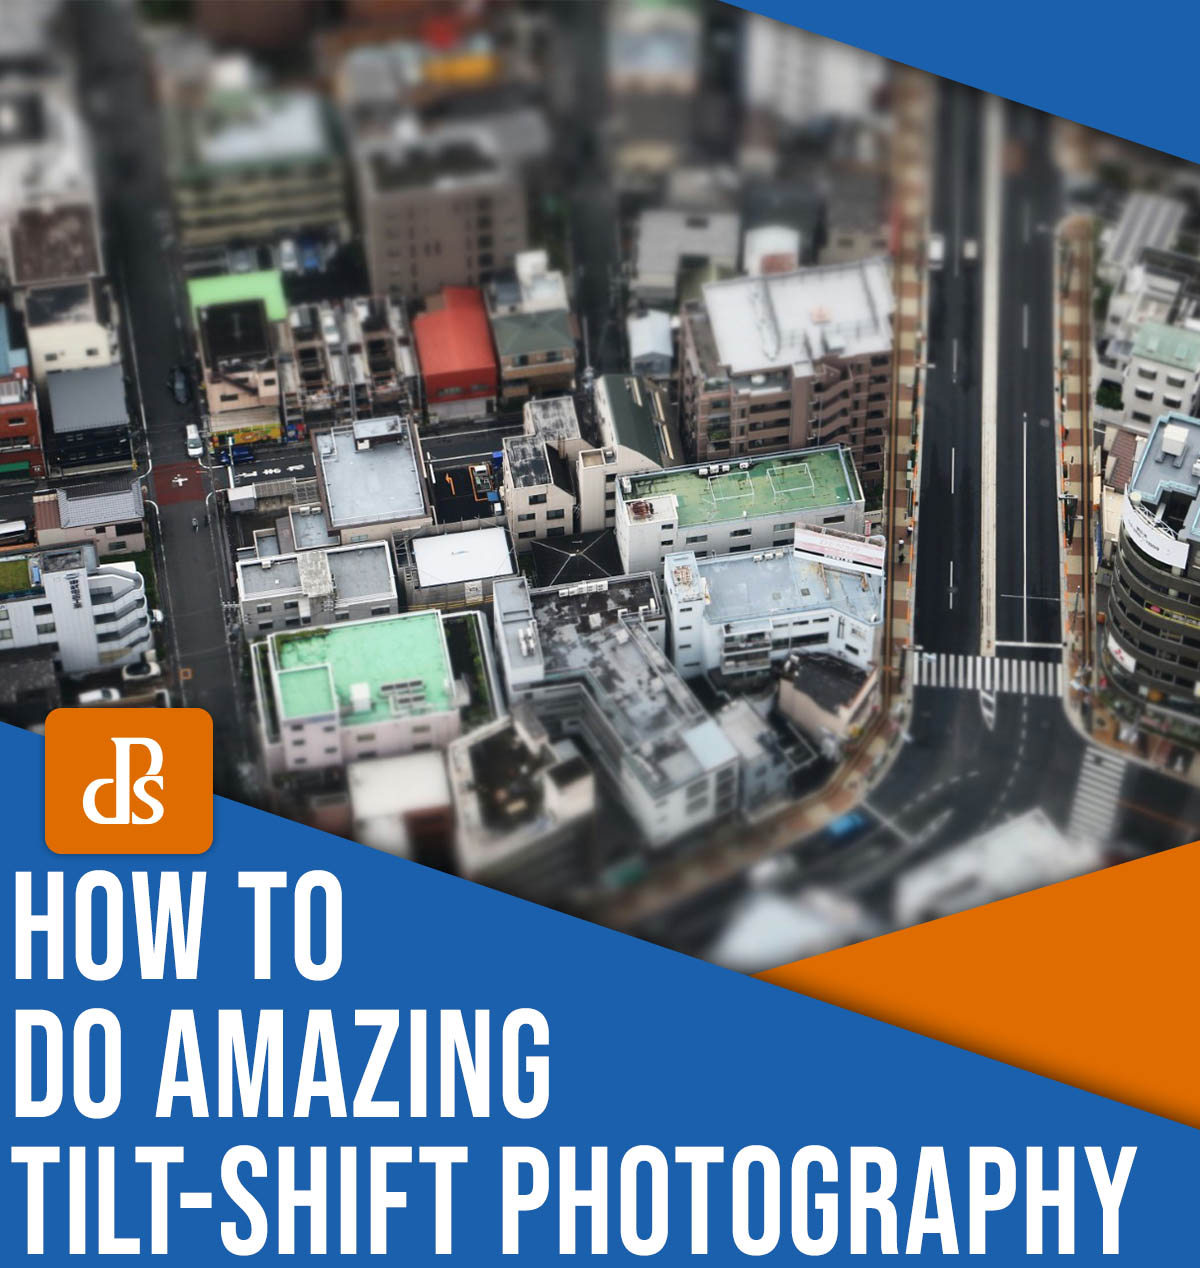 Tilt-Shift Photography: A Simple Introduction